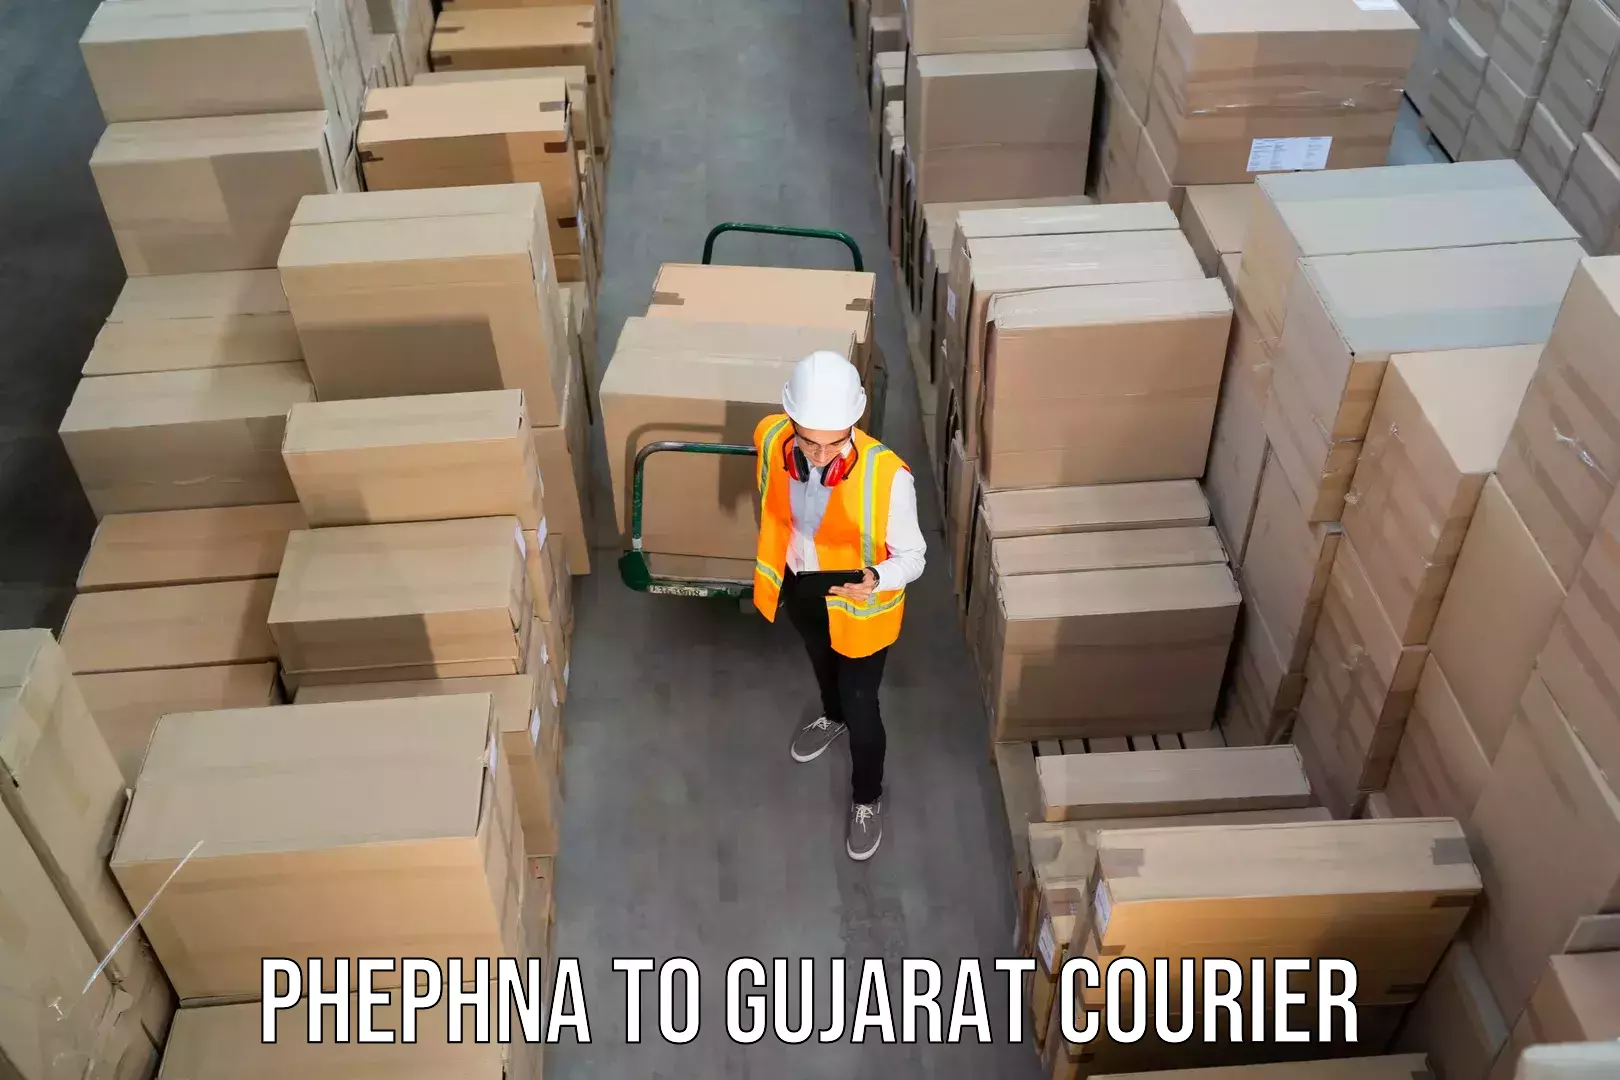 Express logistics service Phephna to Gujarat